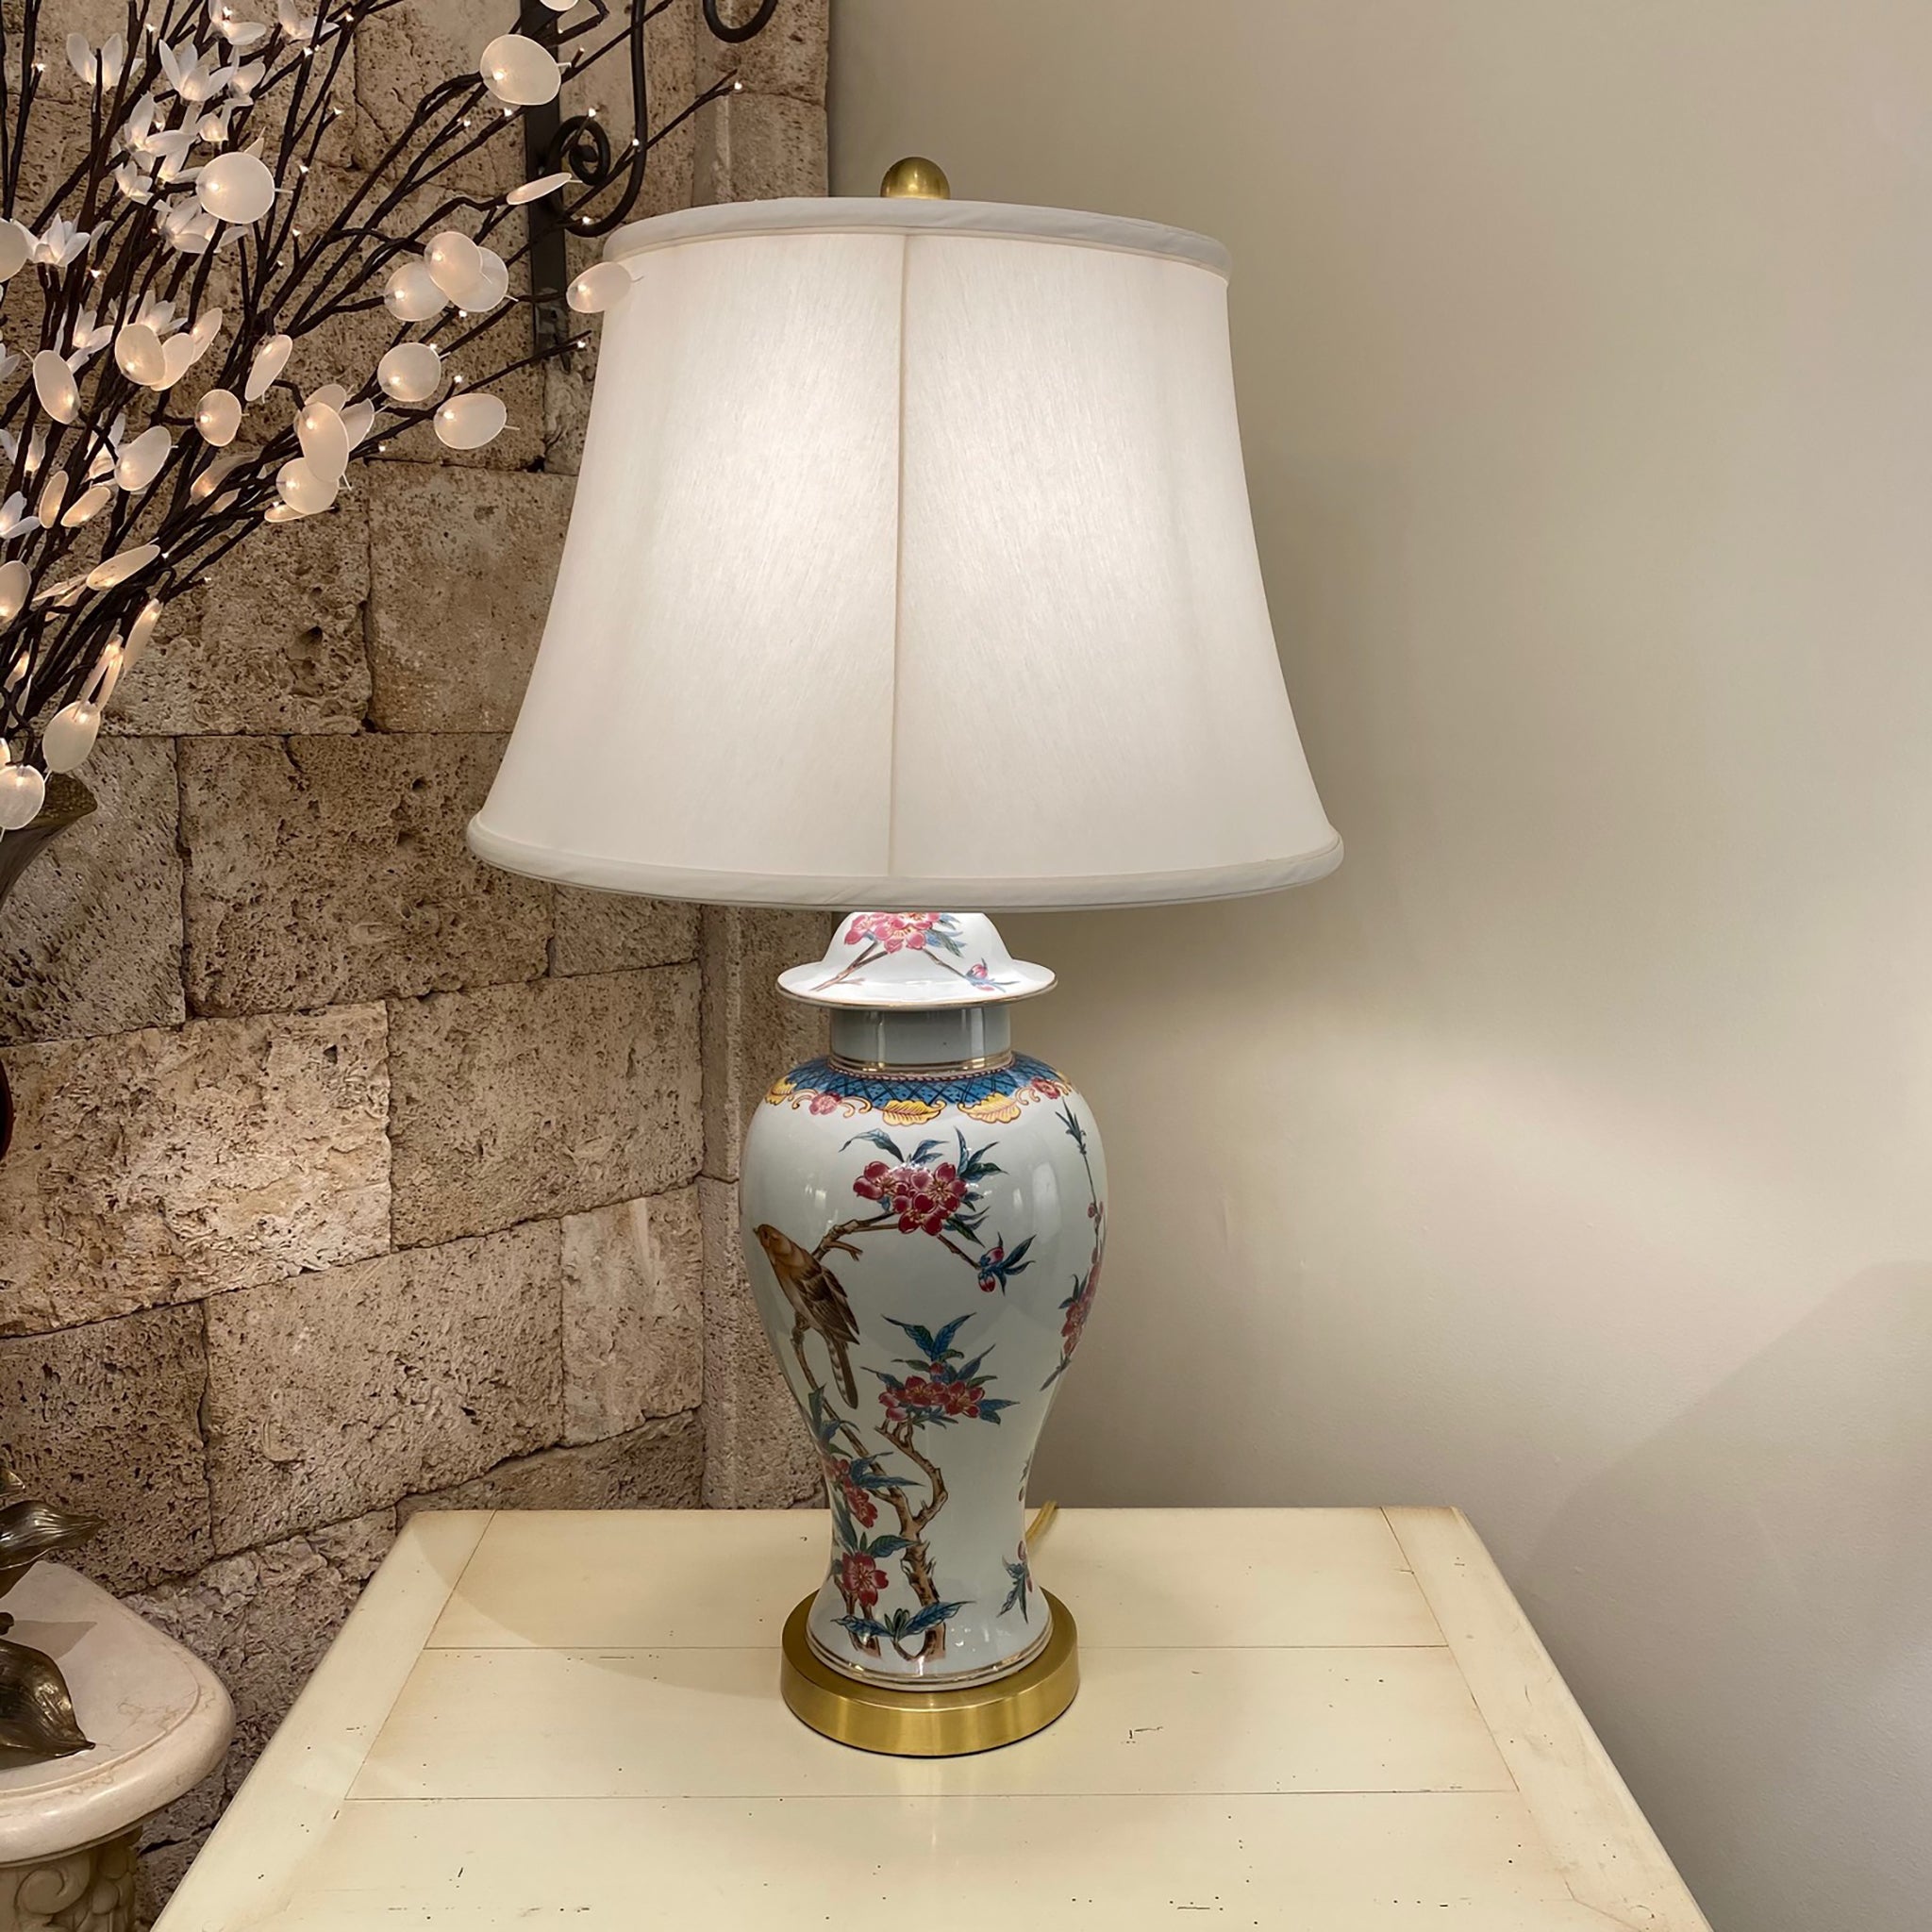 Temple Jar Table Lamp